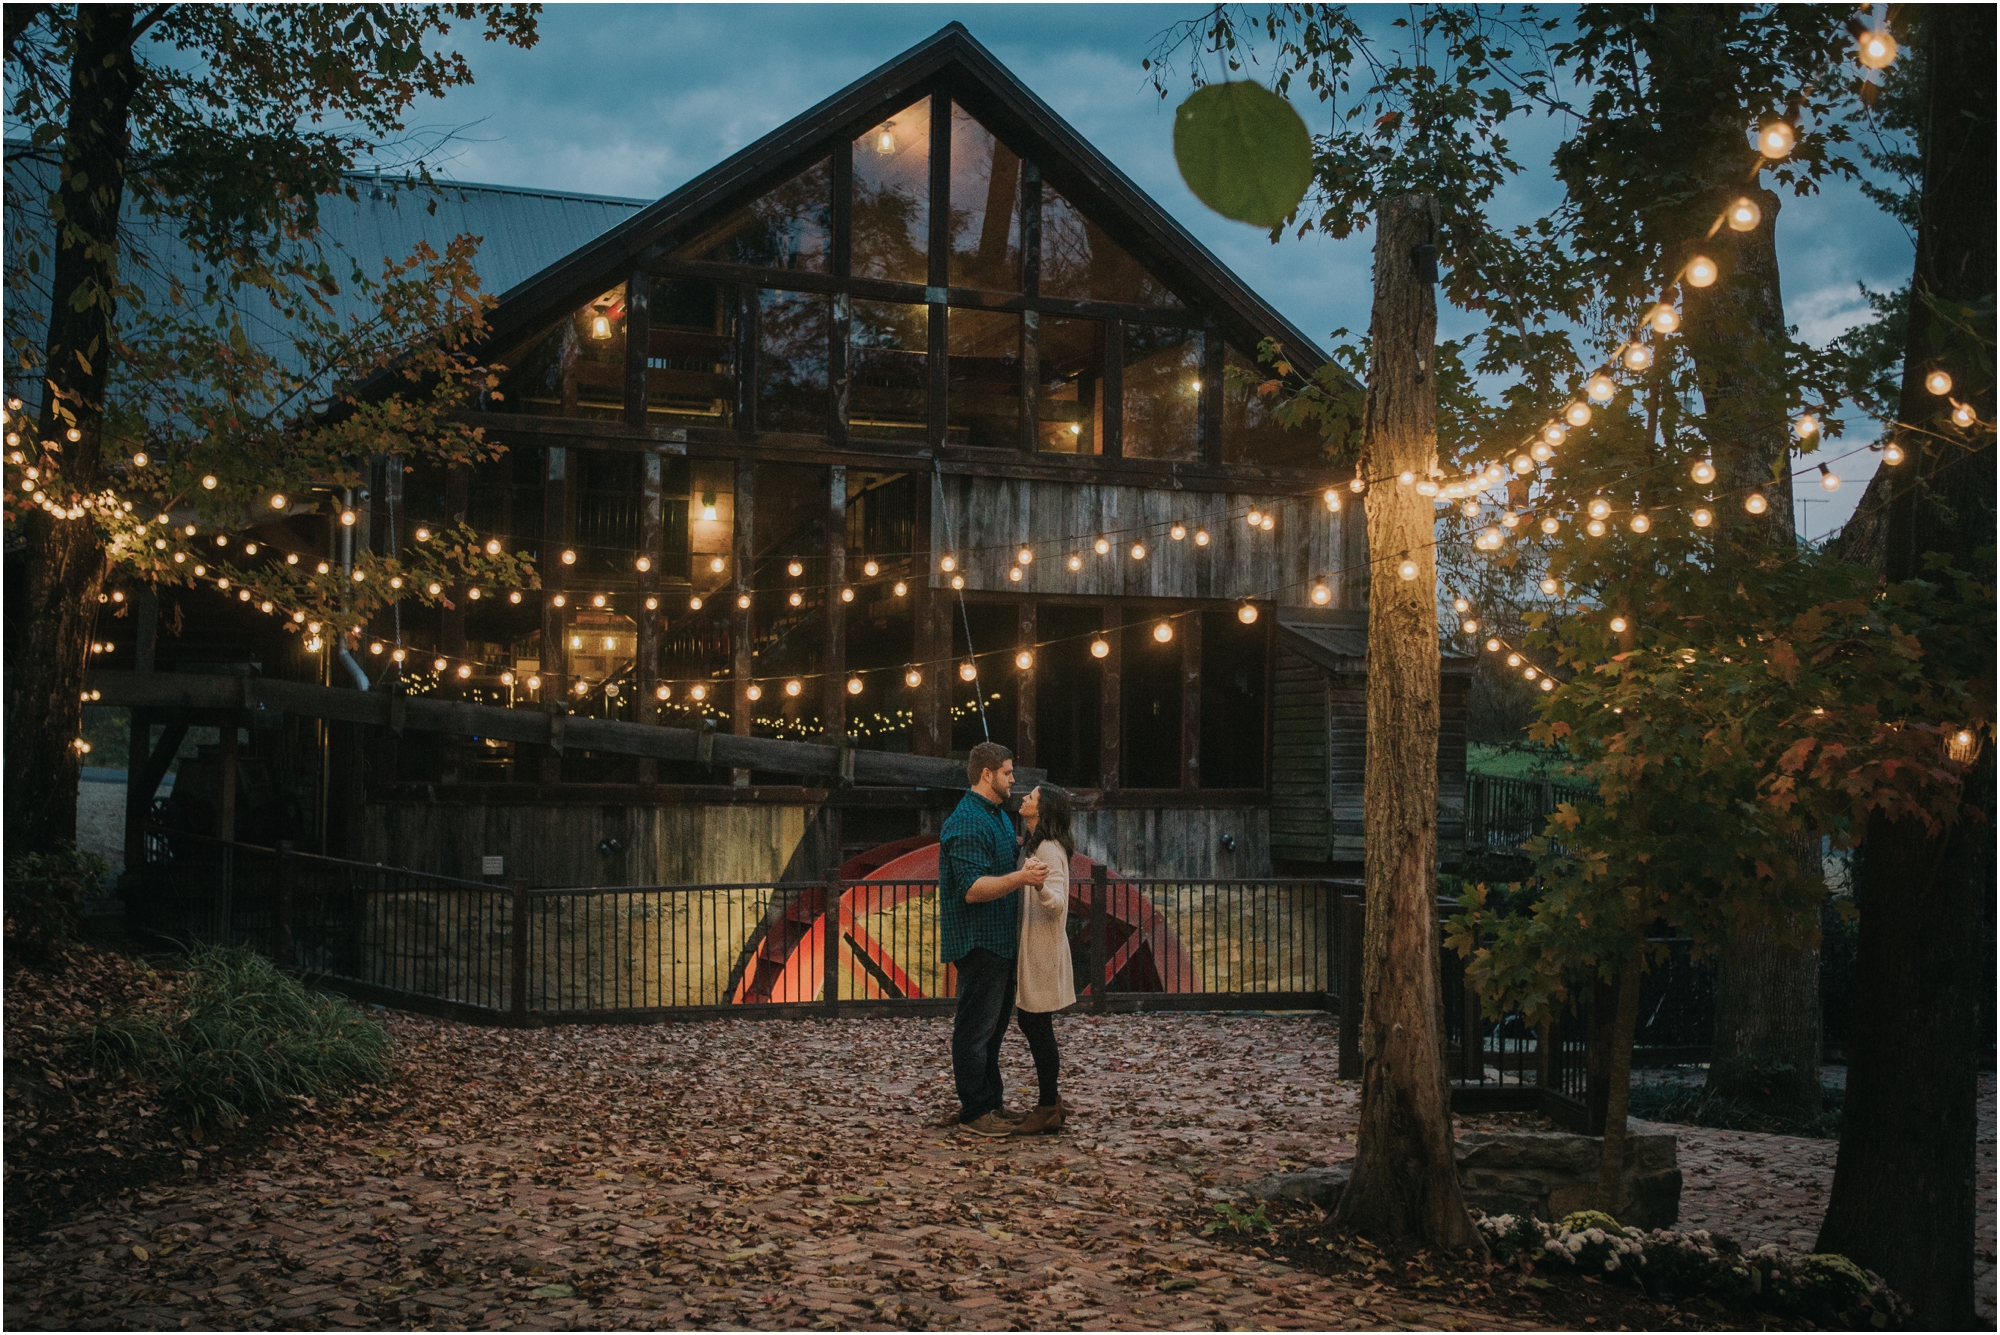 katy-sergent-millstone-limestone-tn-rustic-fall-engagement-session-adventurous-outdoors-intimate-elopement-wedding-northeast-johnson-city-photographer_0040.jpg